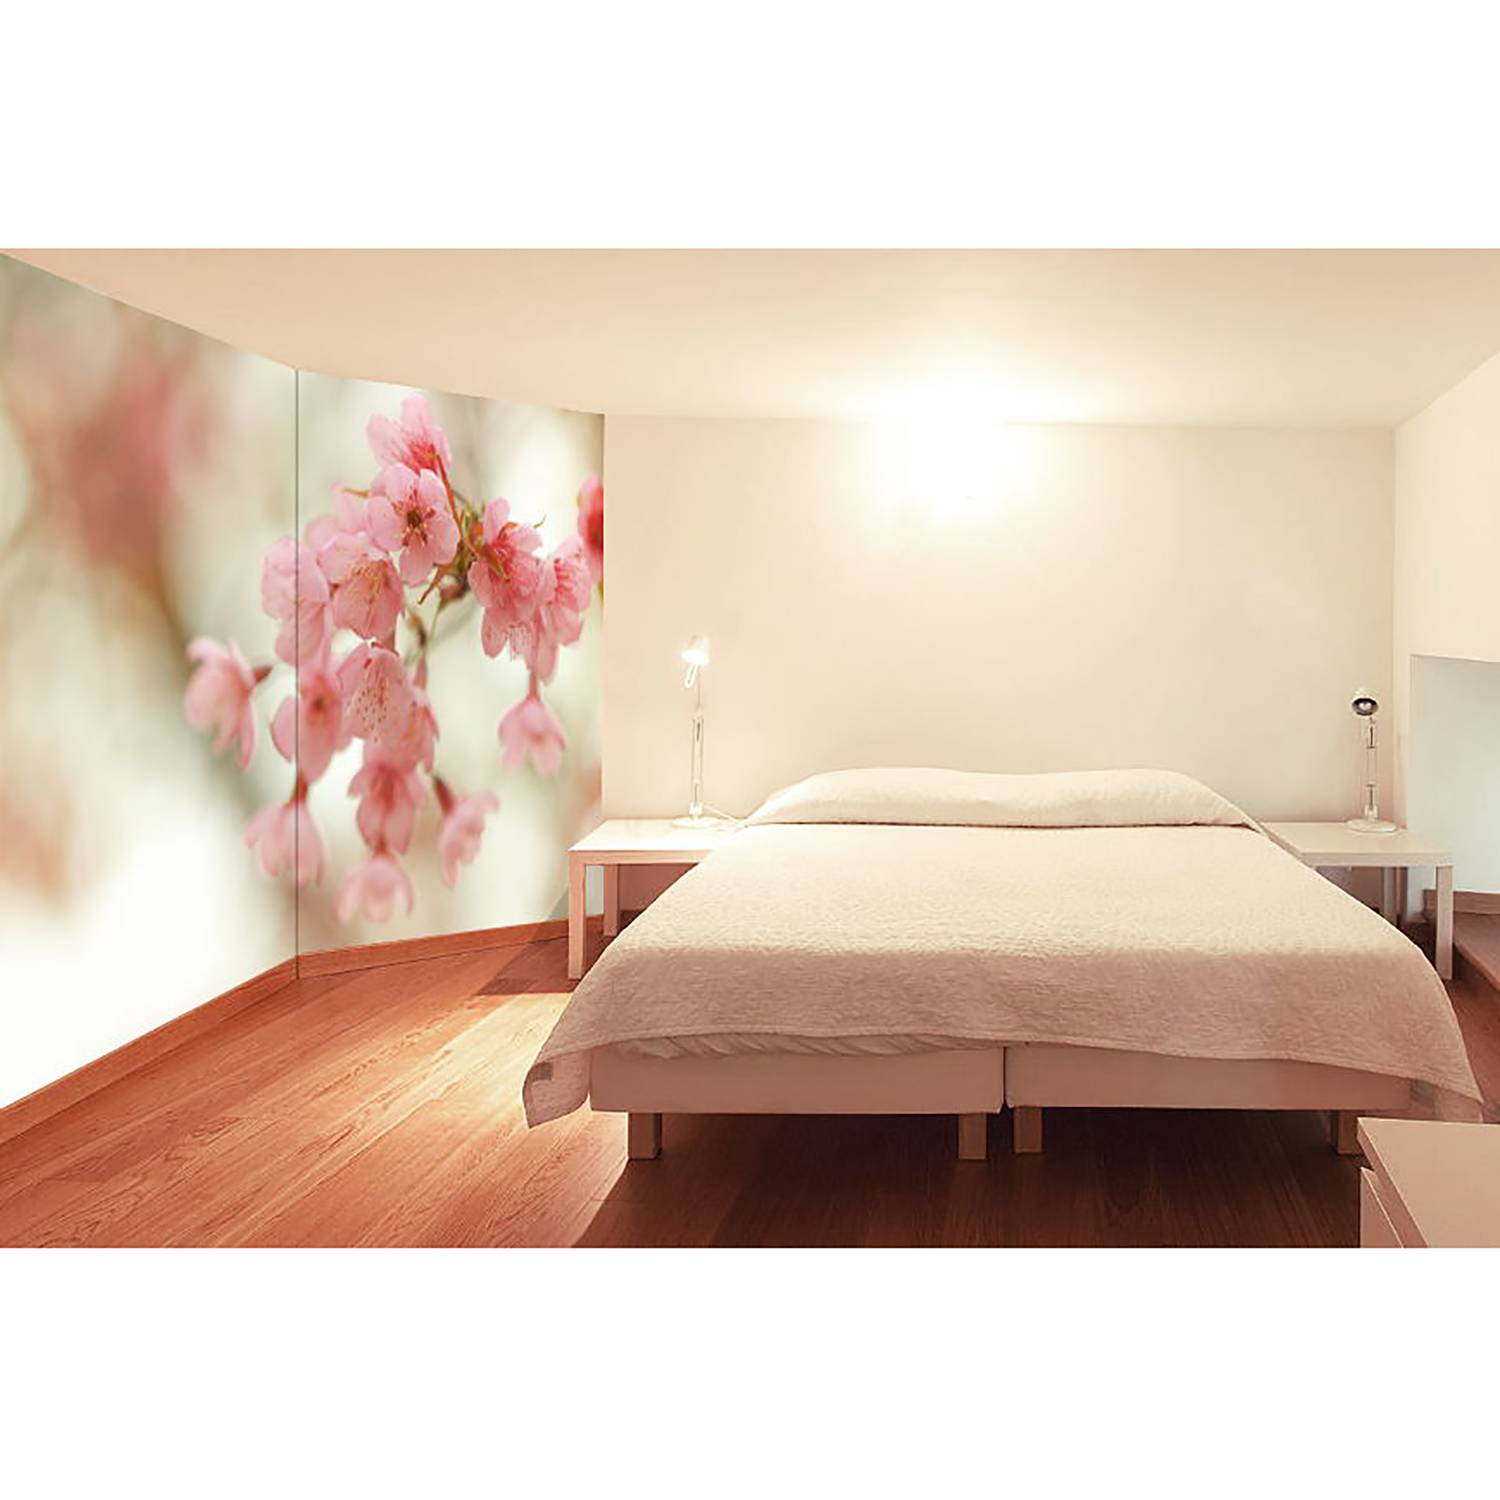 Vliestapete Cherry Blossoms von WandbilderXXL